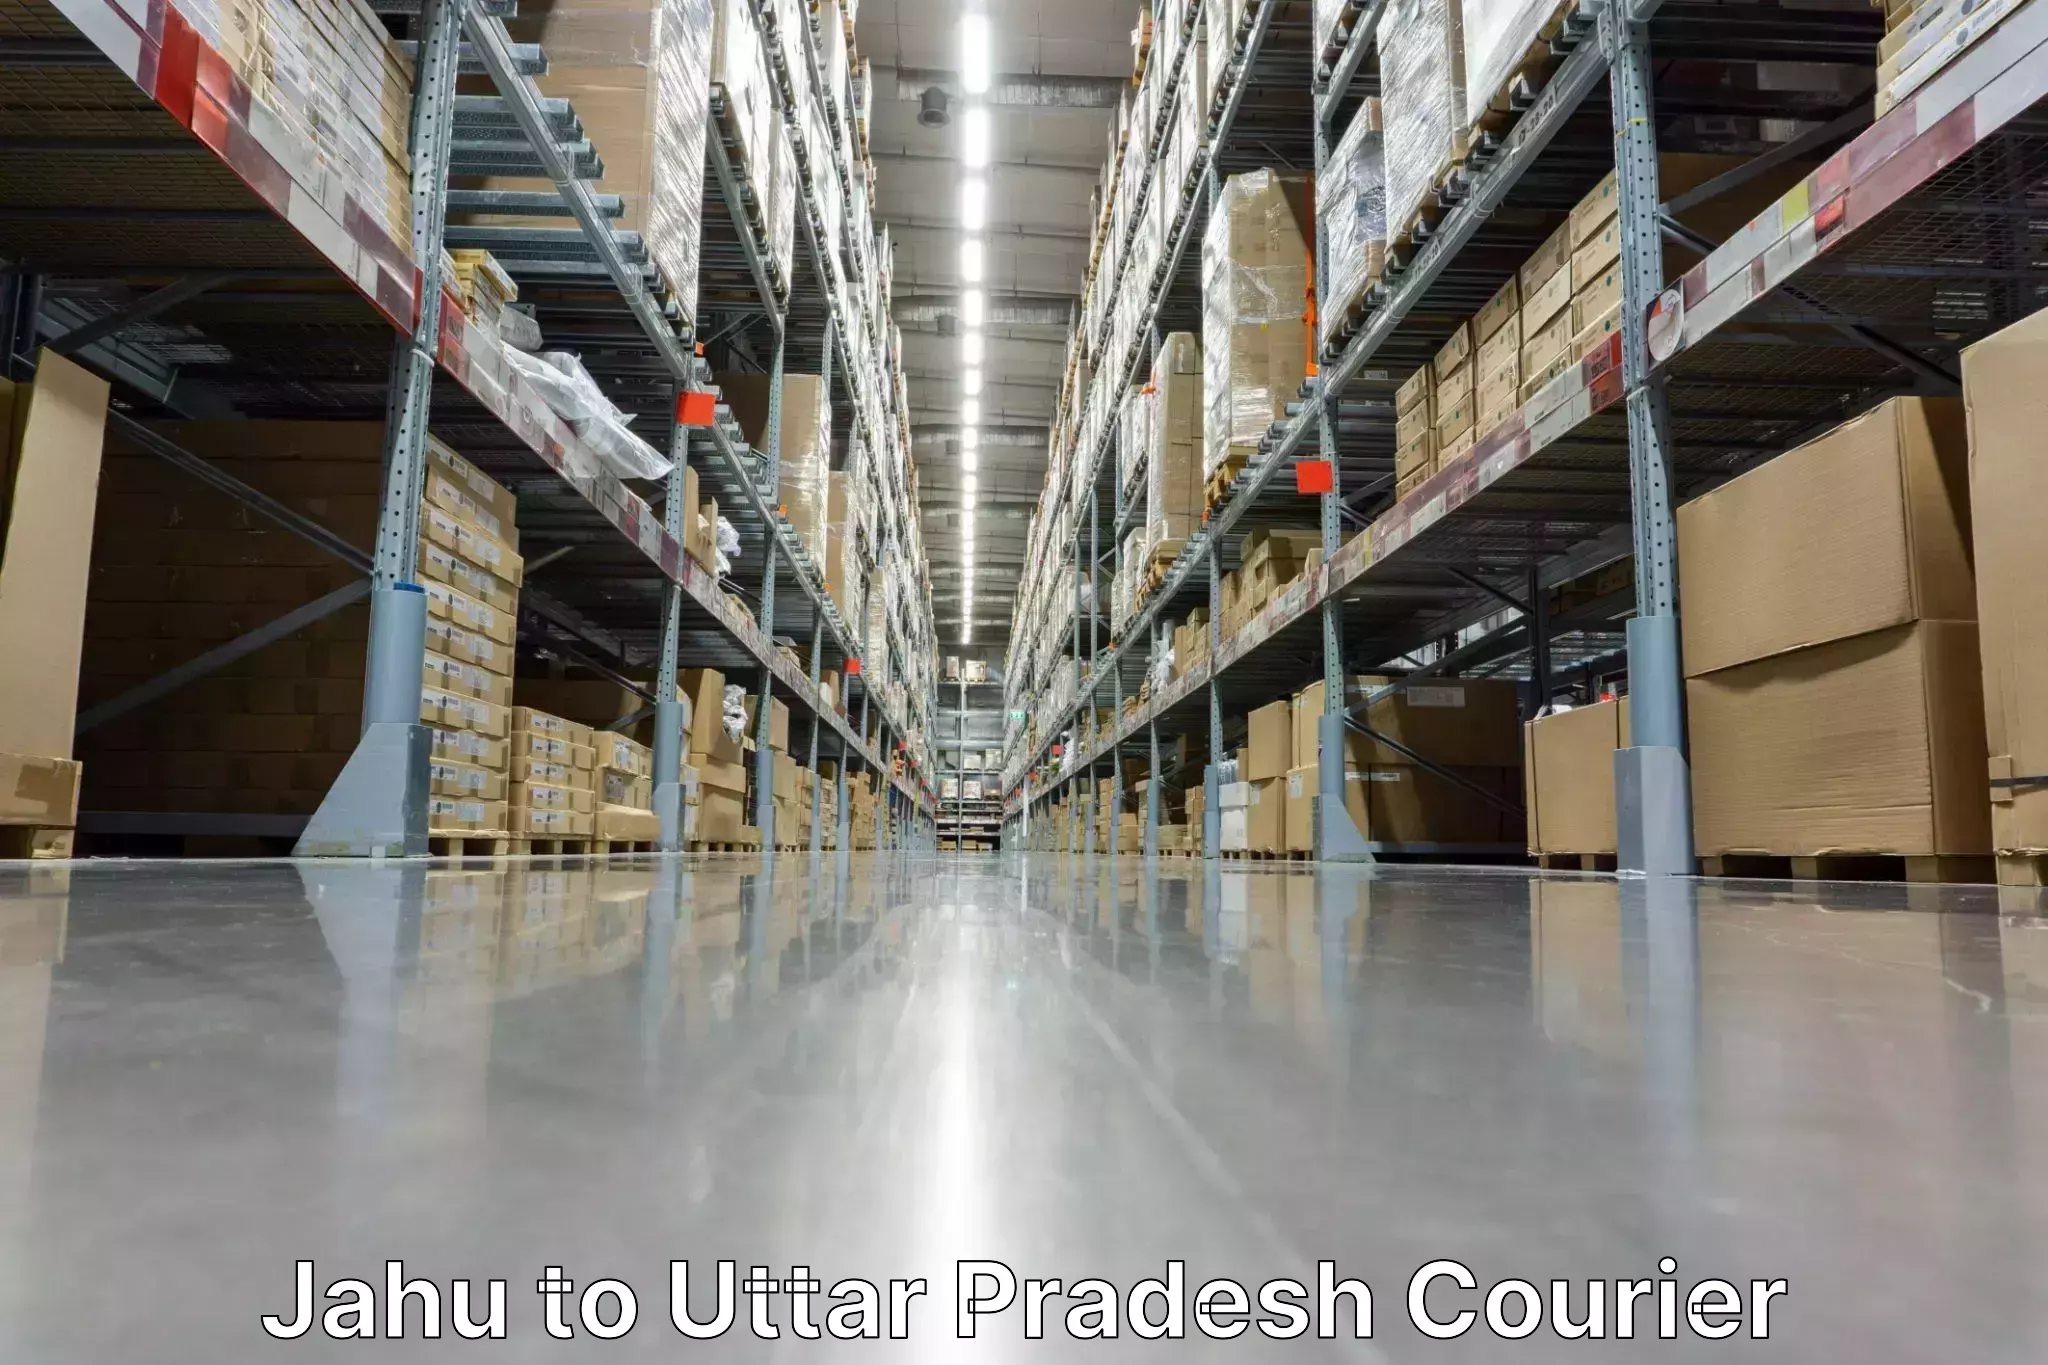 Efficient logistics management Jahu to Khurja